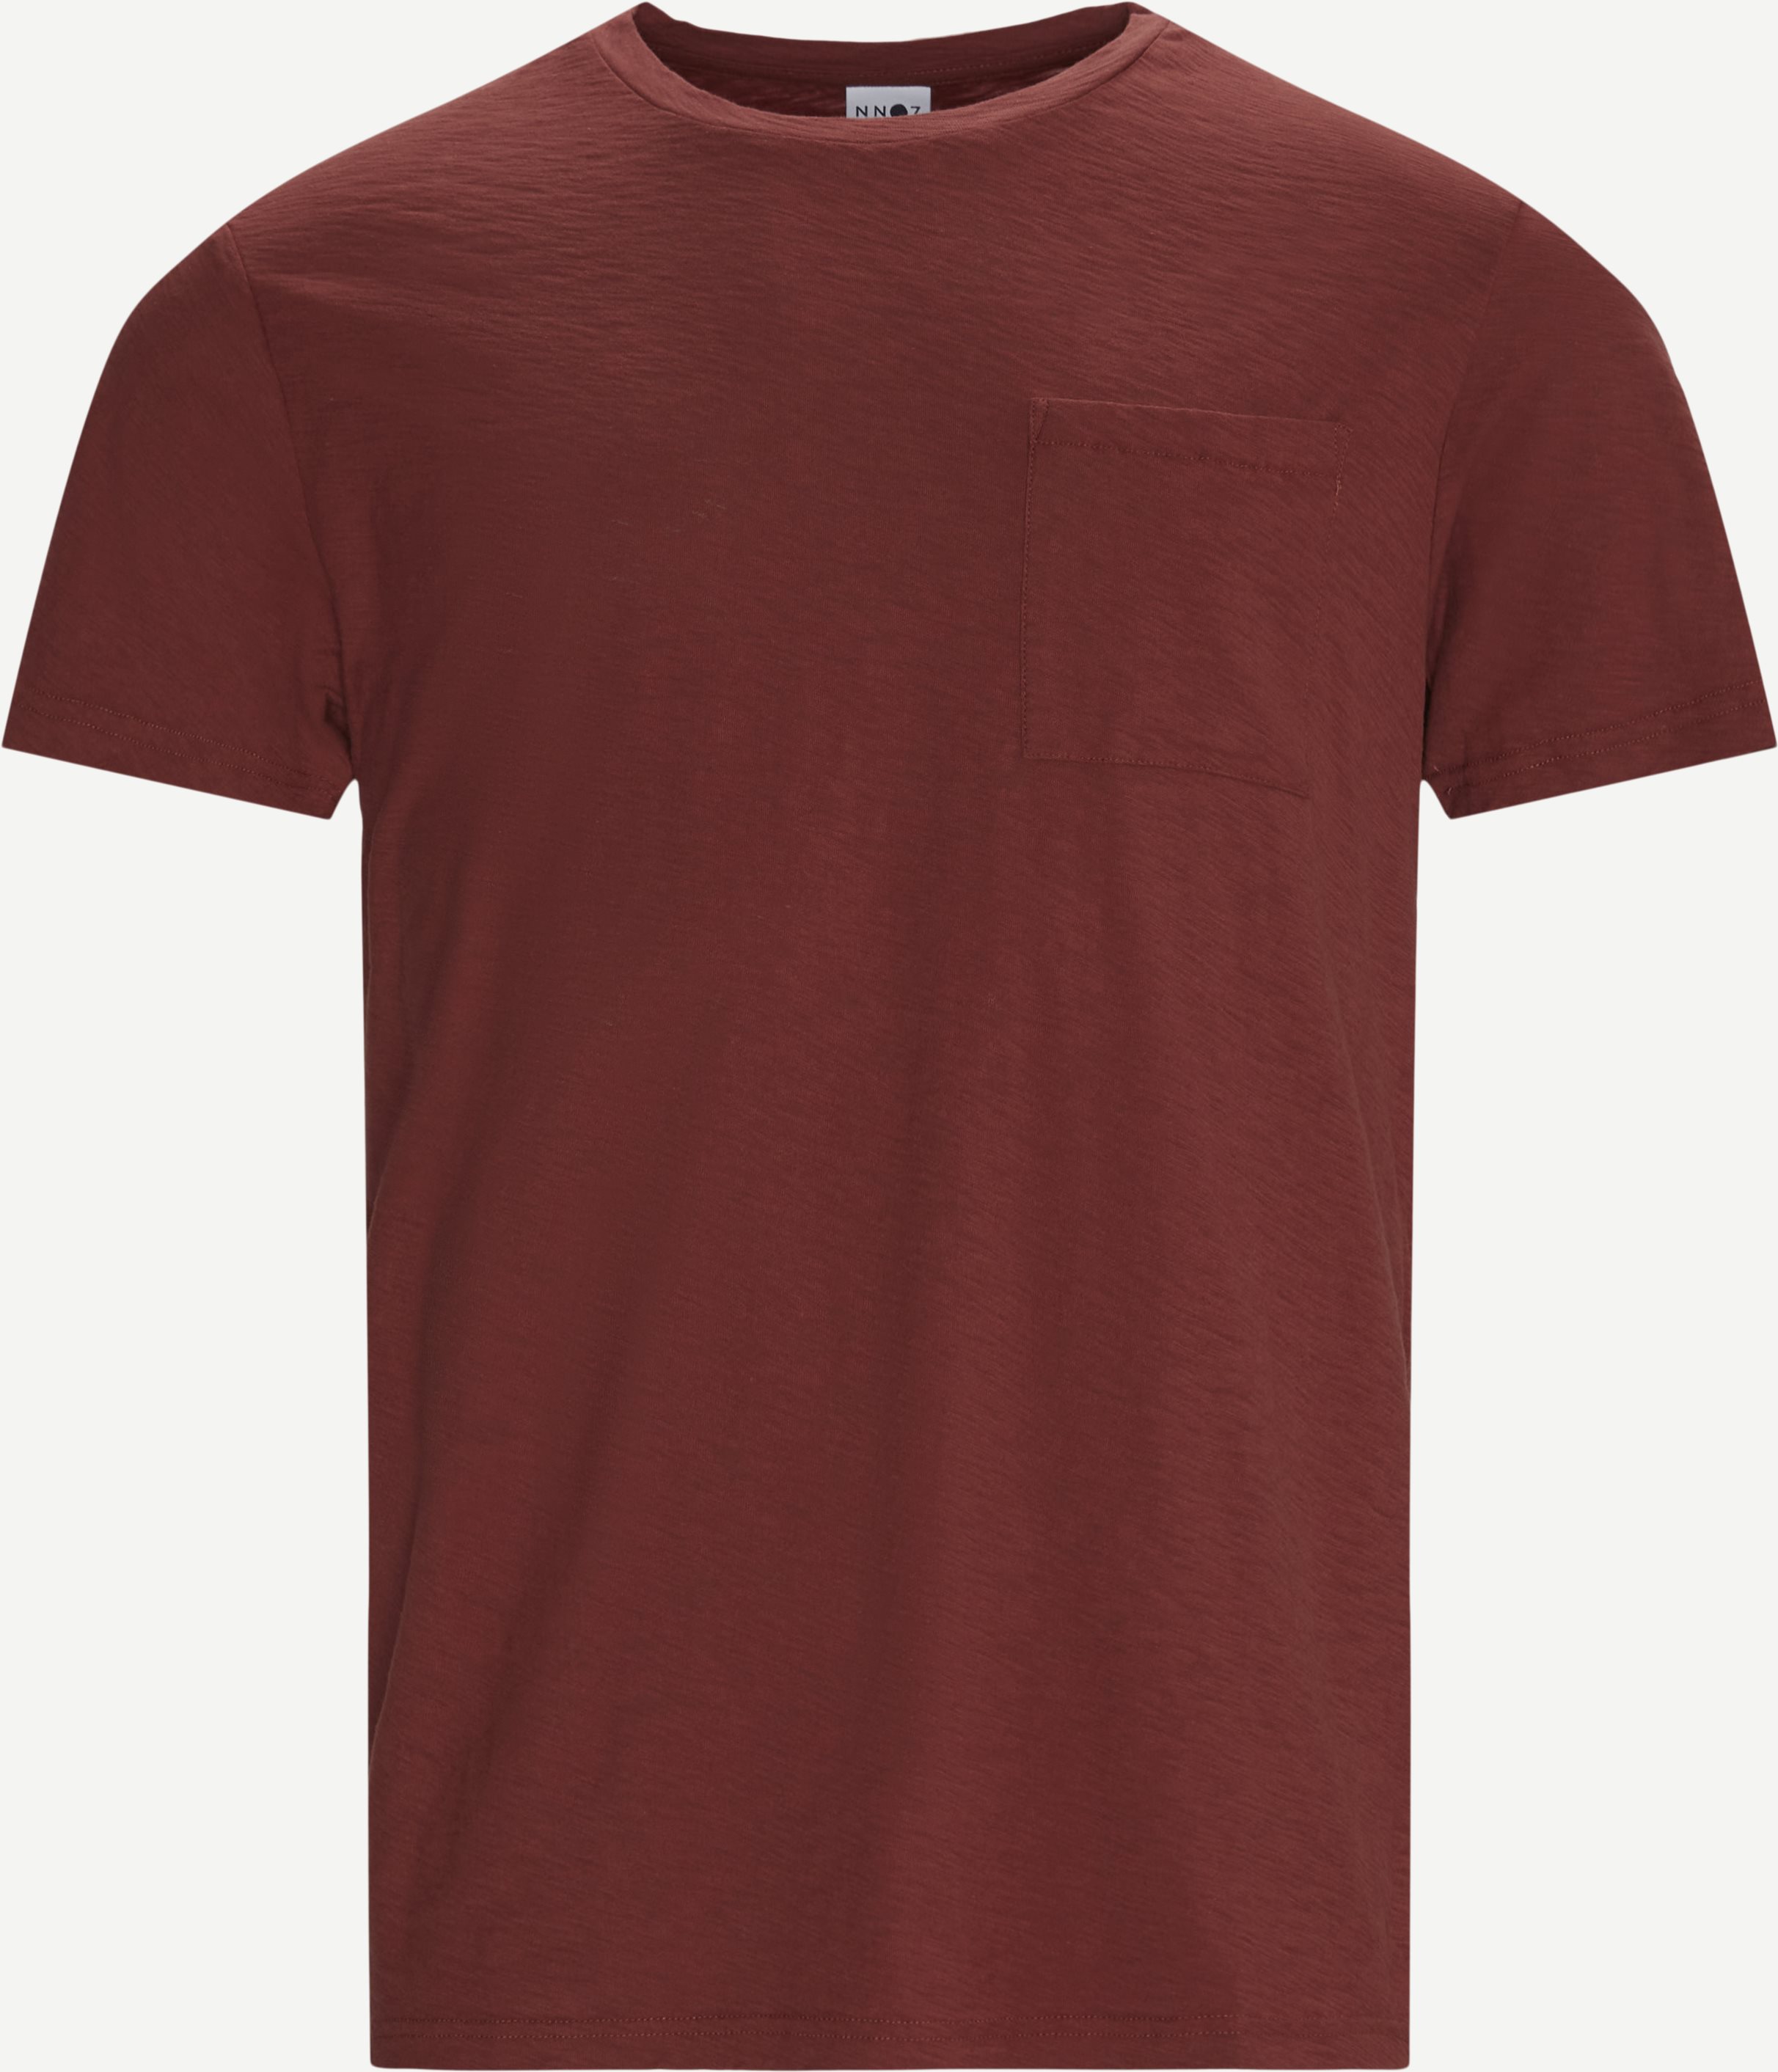 Aspen Tee - T-shirts - Regular fit - Red